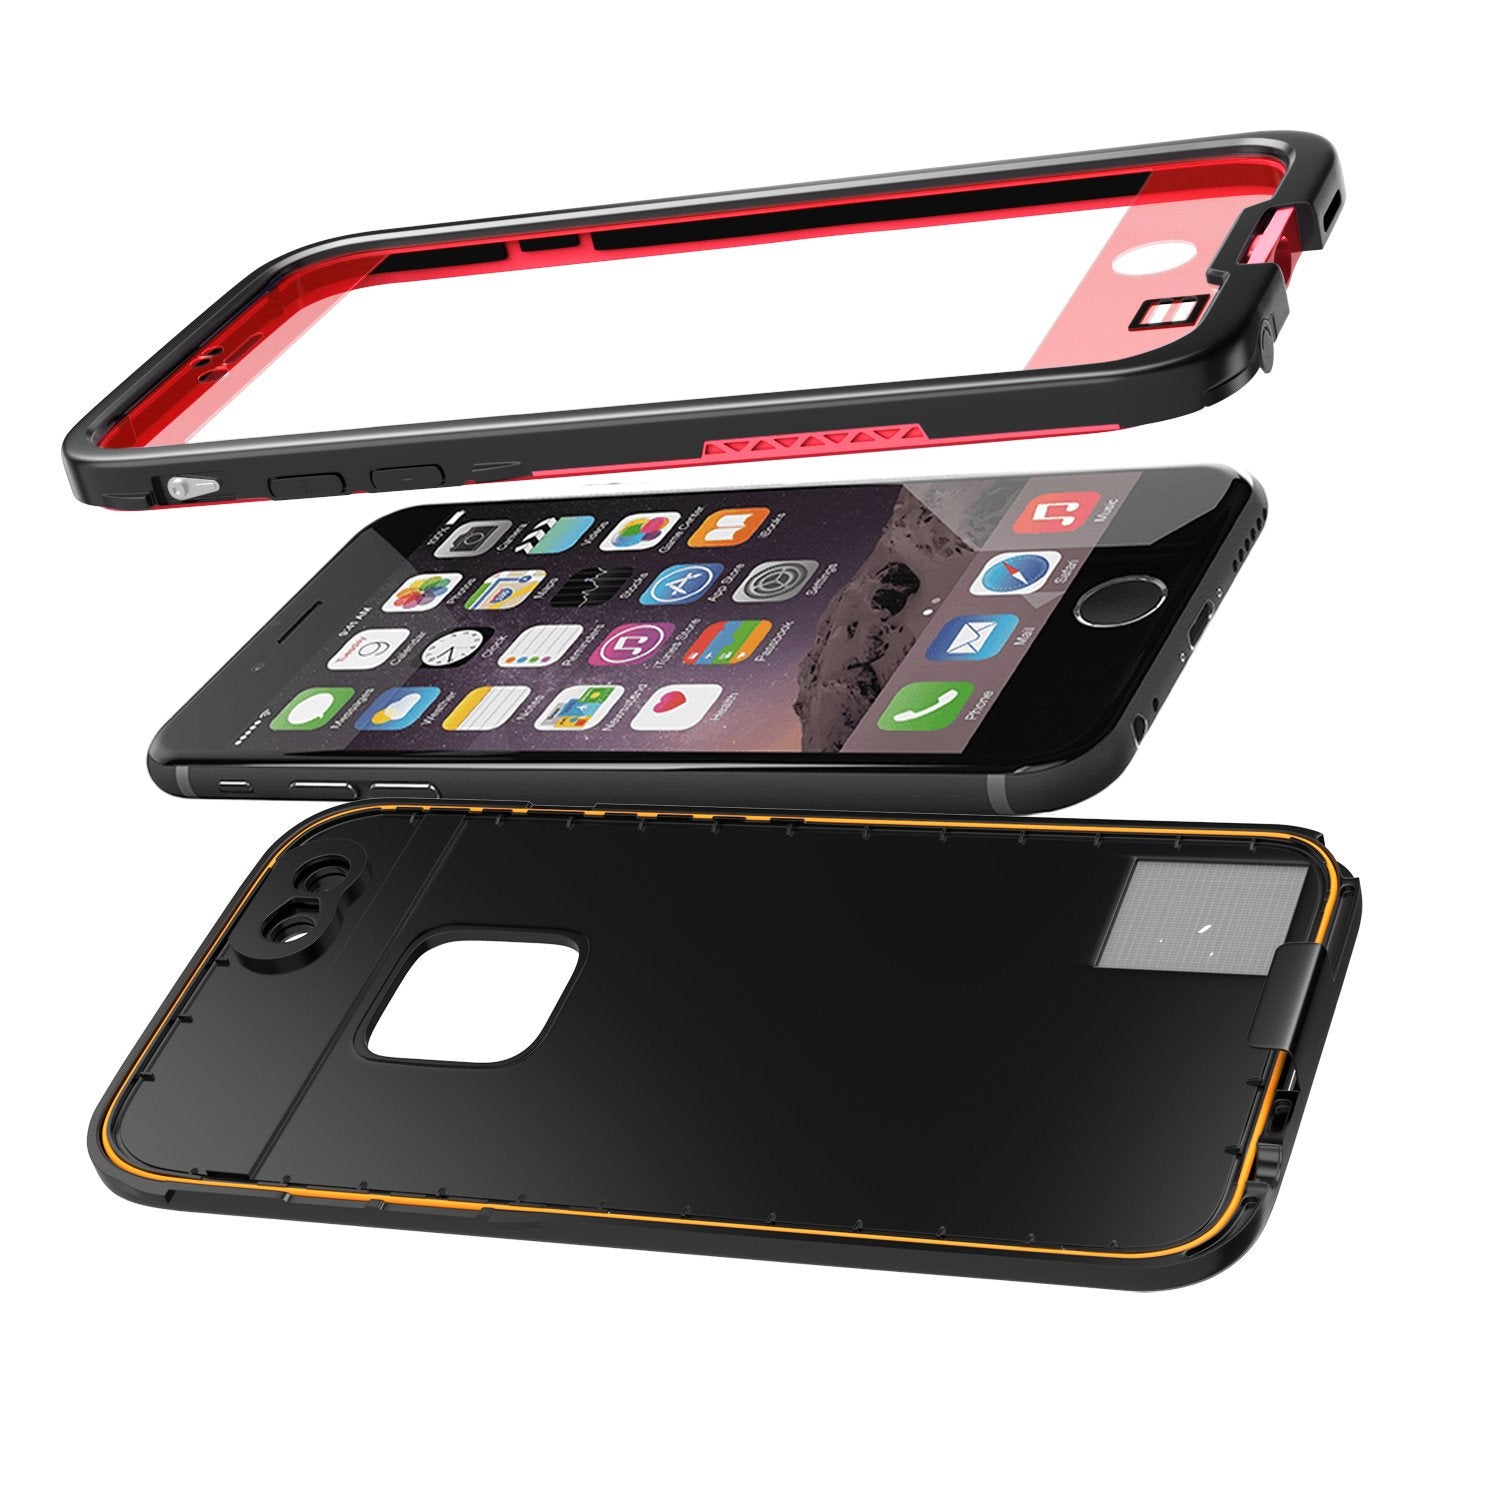 iPhone 6/6S Plus Waterproof Case, Punkcase SpikeStar Red Thin Fit 6.6ft Underwater IP68 | Warranty